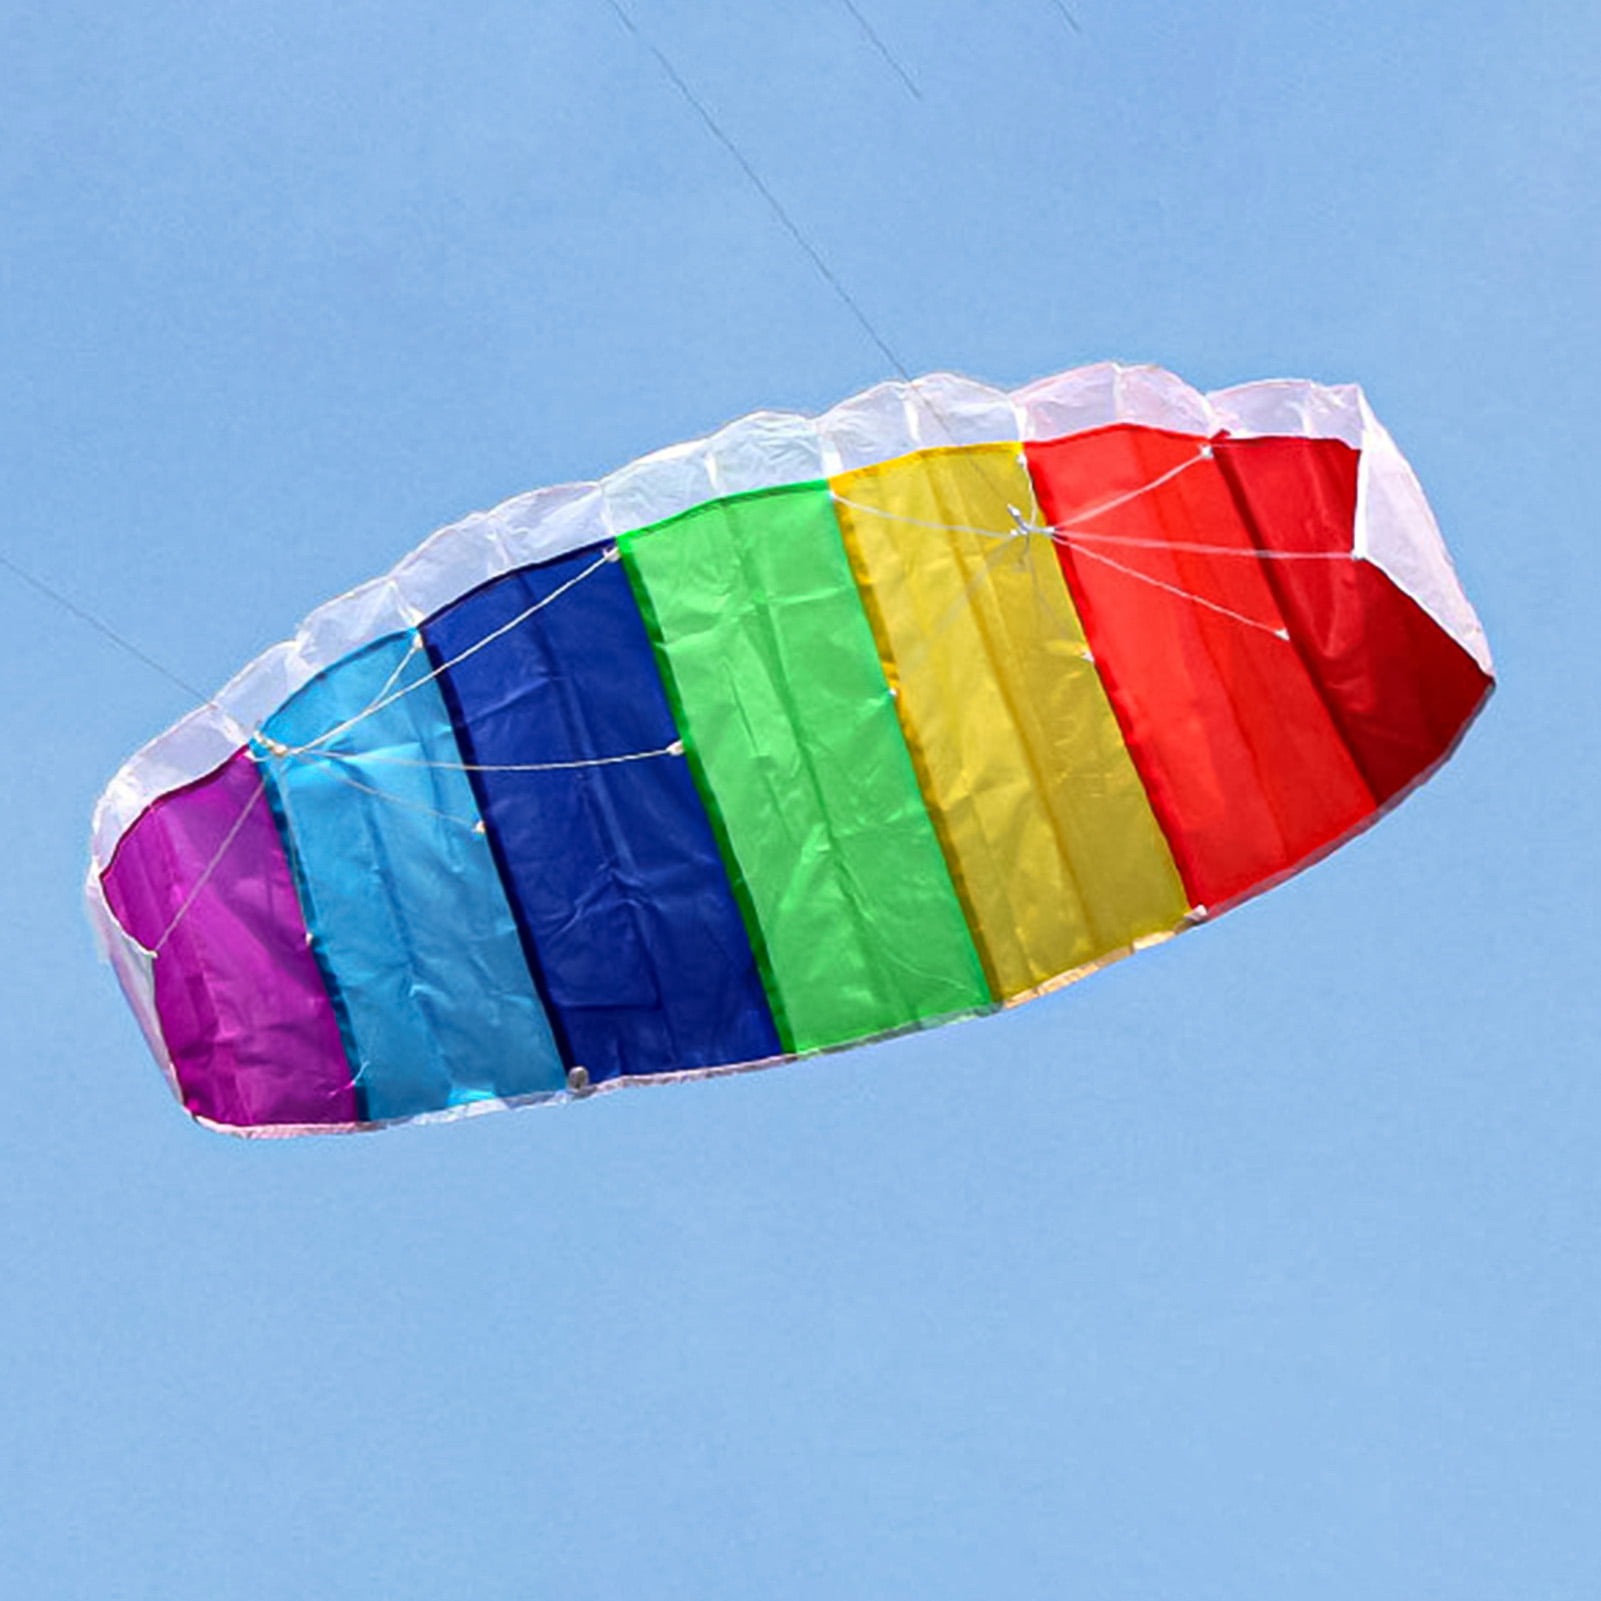 140/270cm Rainbow Kite Parafoil Stunt Sport Twin Dual Line Frameless Outdoor Toy 